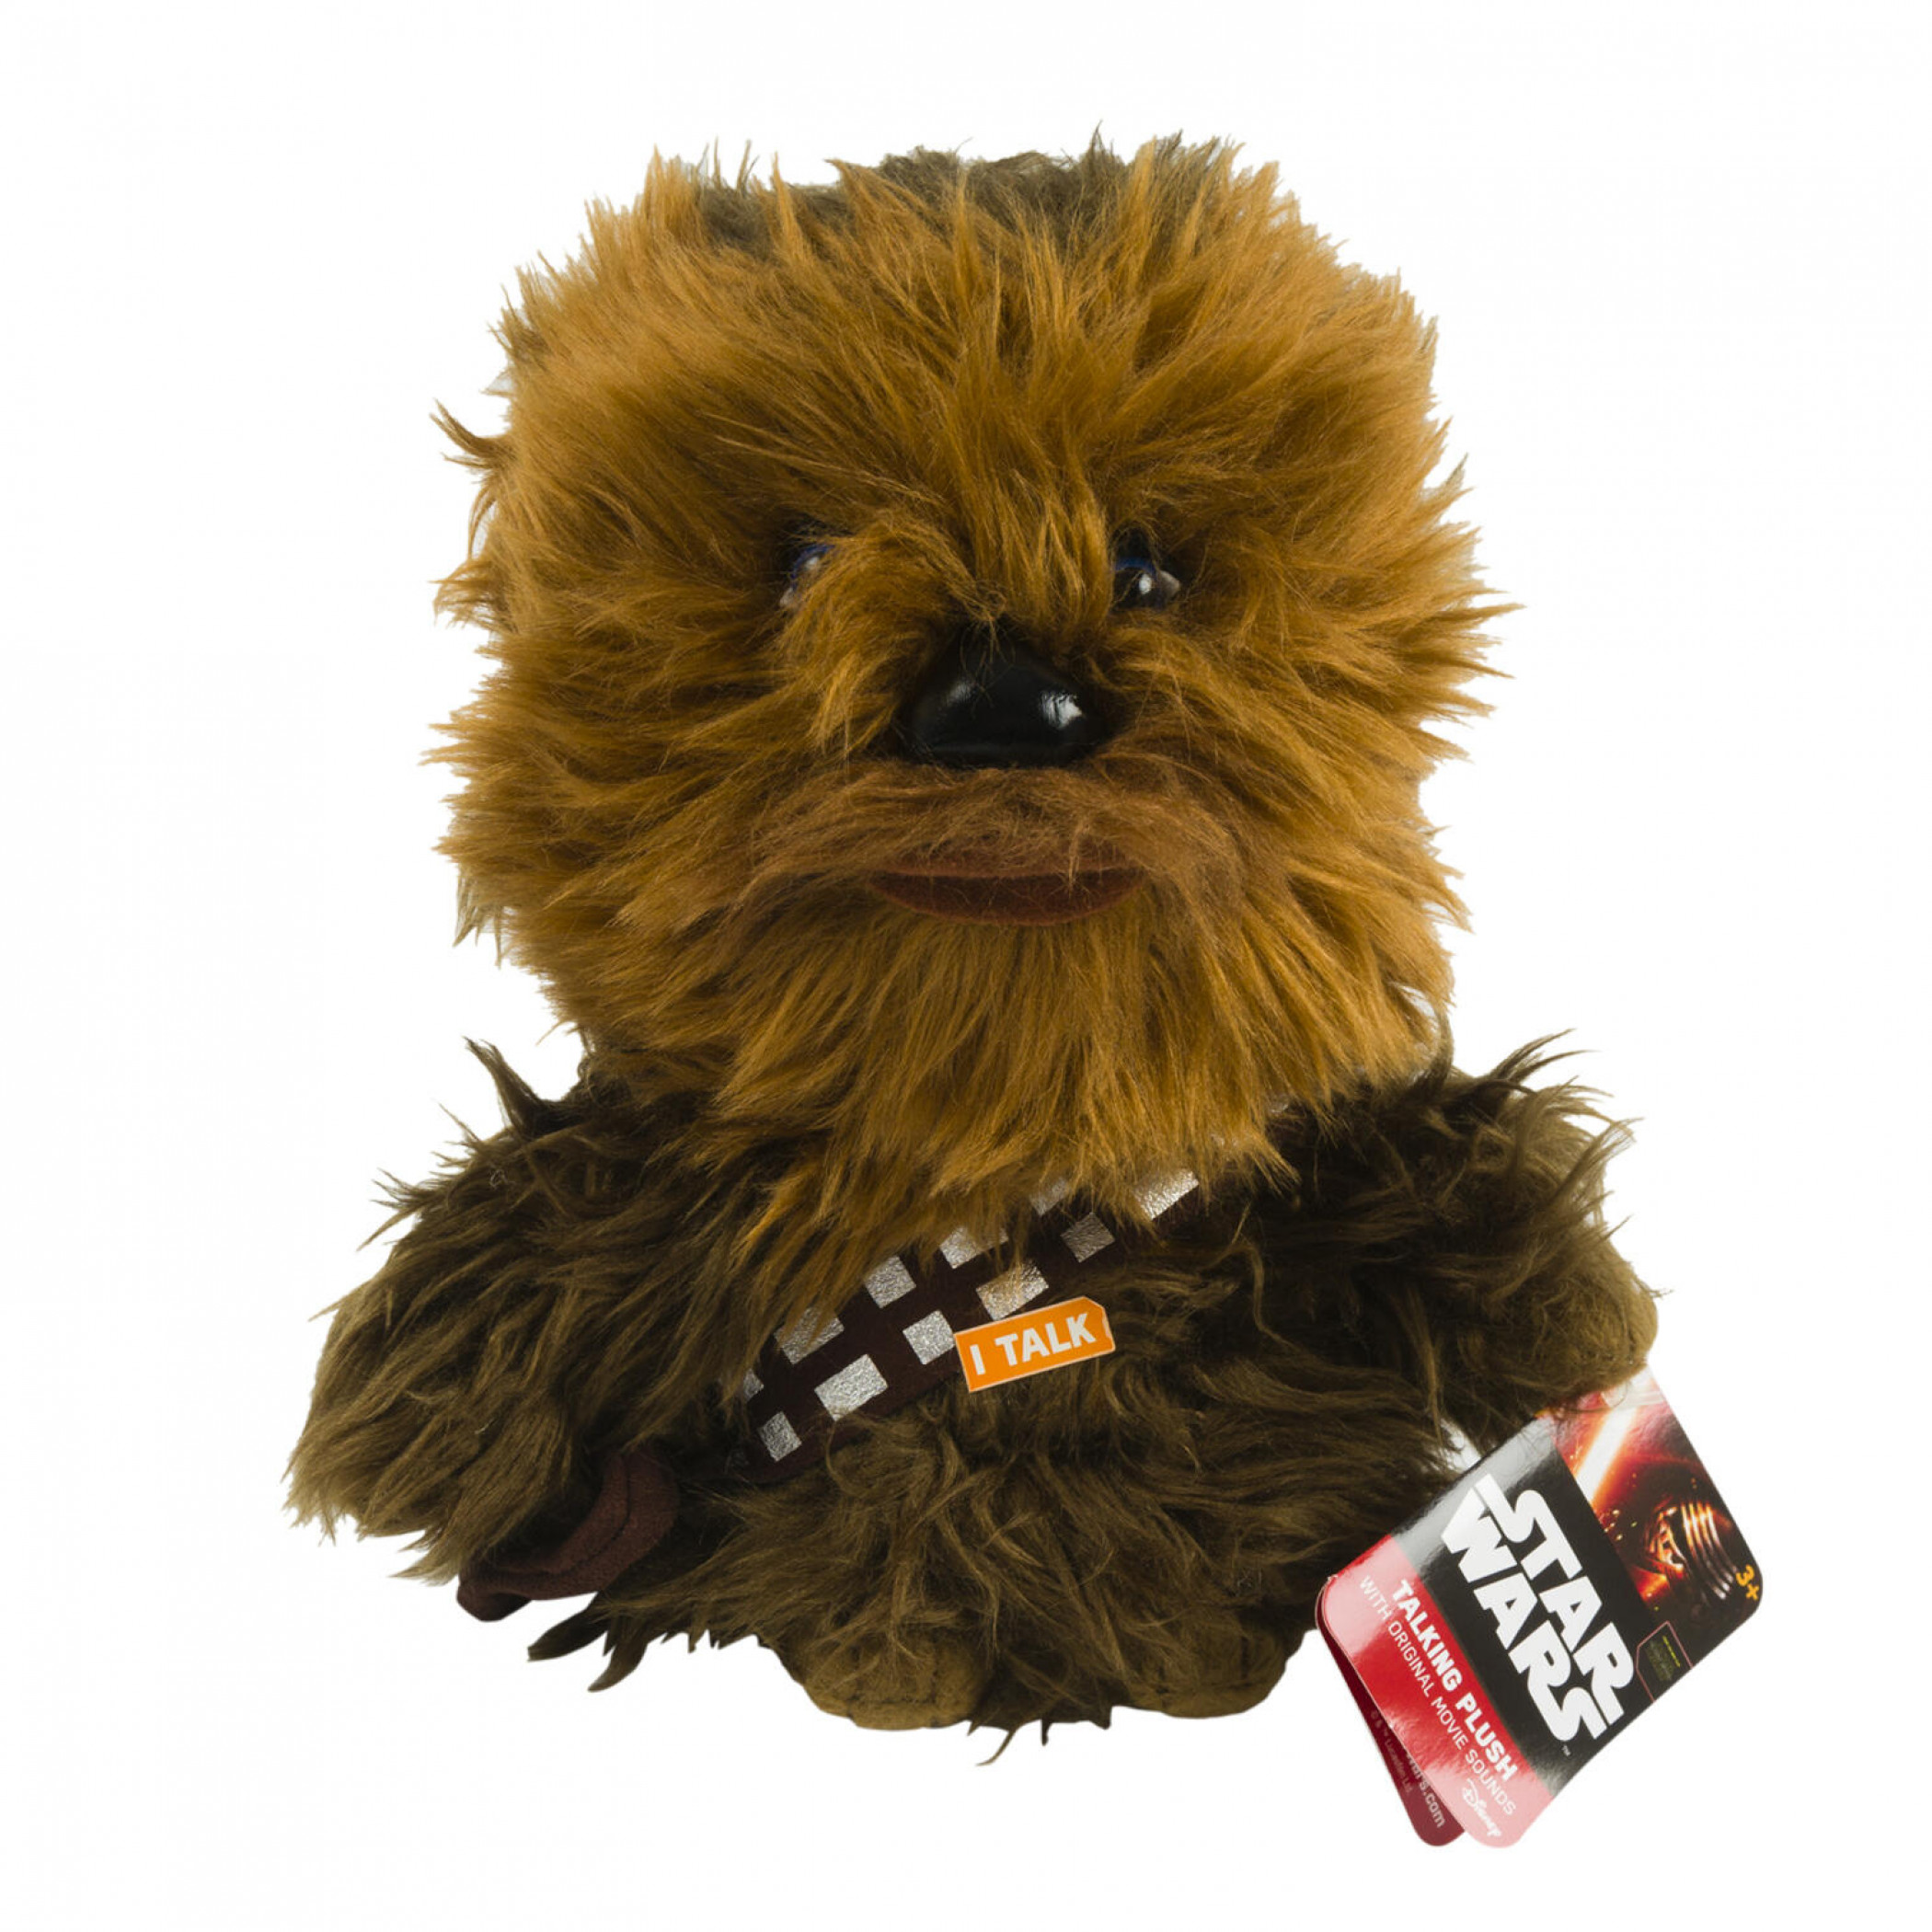 Star Wars Chewbacca Stylized 9" Talking Plush Doll